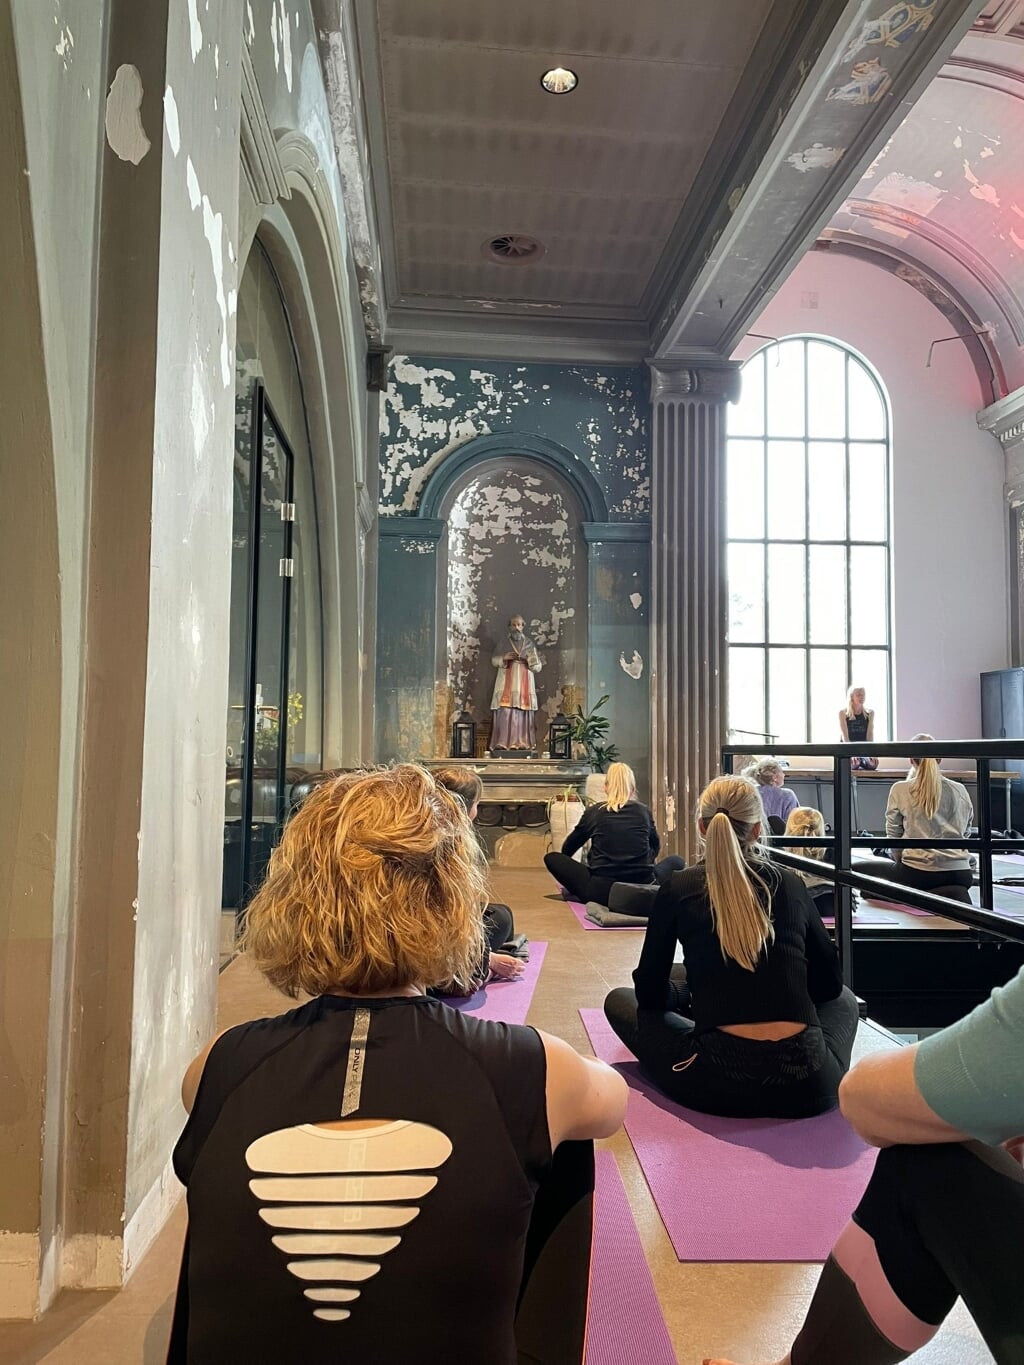 Maak kennis met (yin) yoga in de Blokkerk in Blokker.